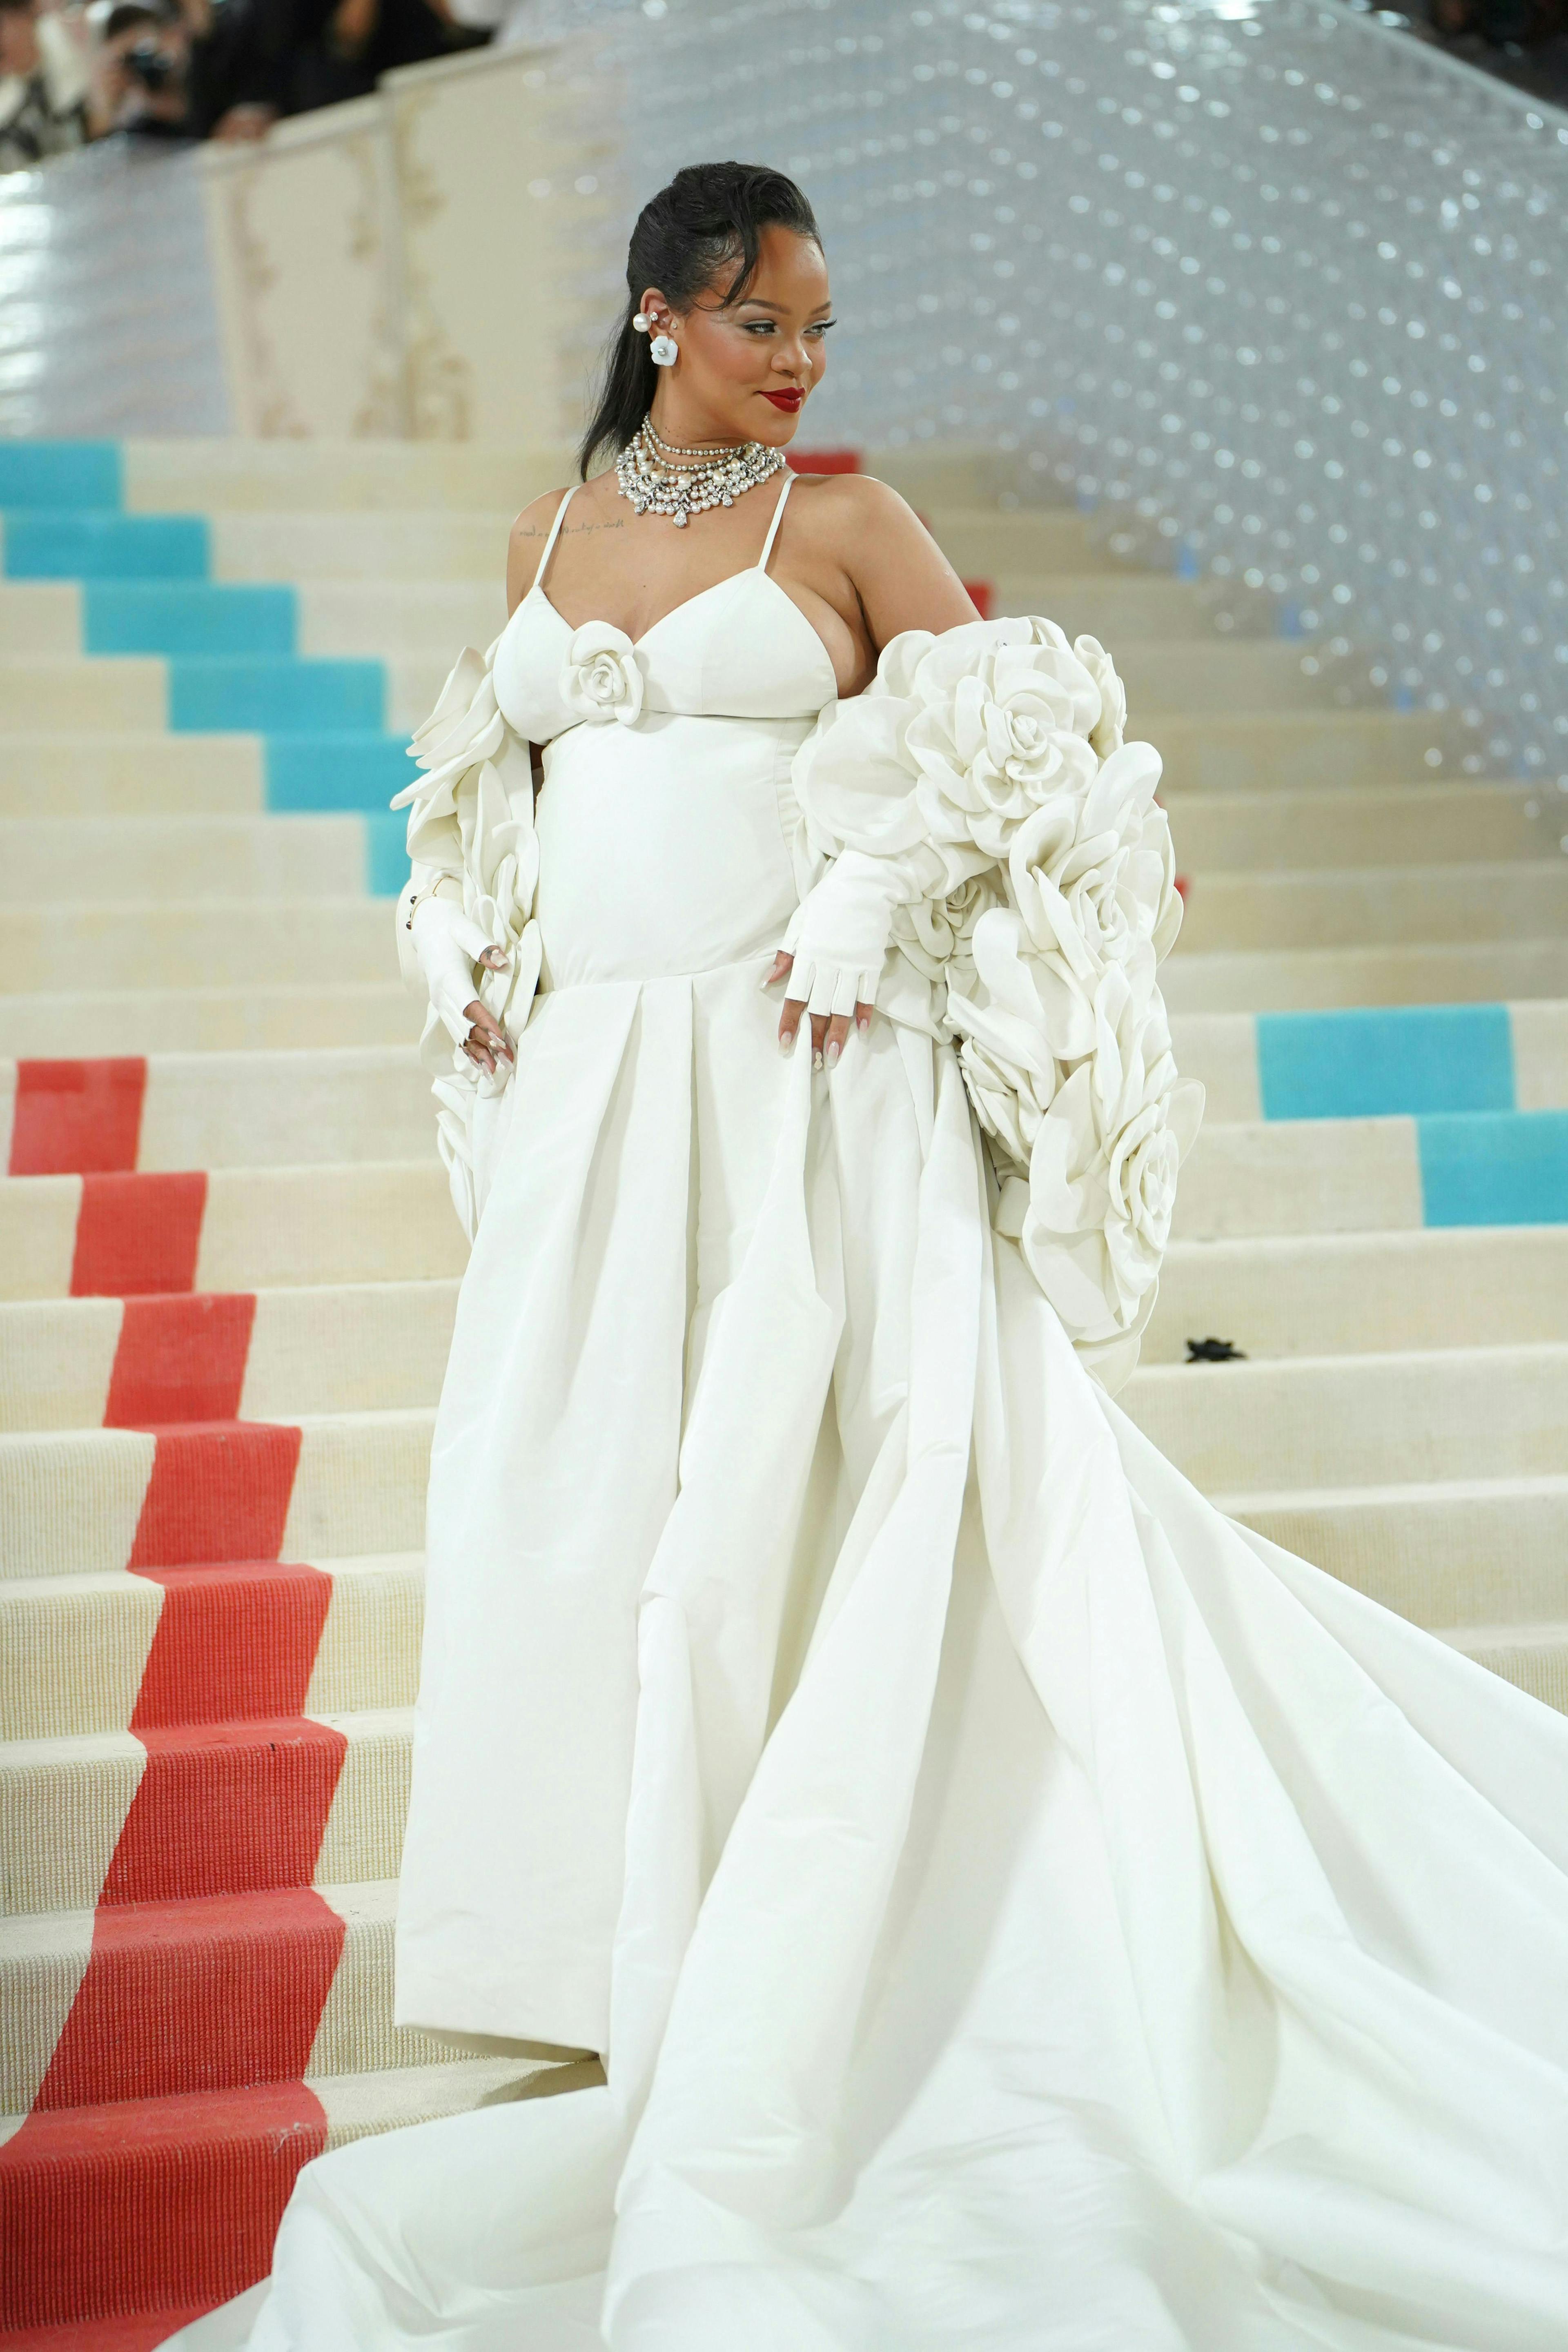 new york dress fashion formal wear gown wedding gown adult bride female person woman